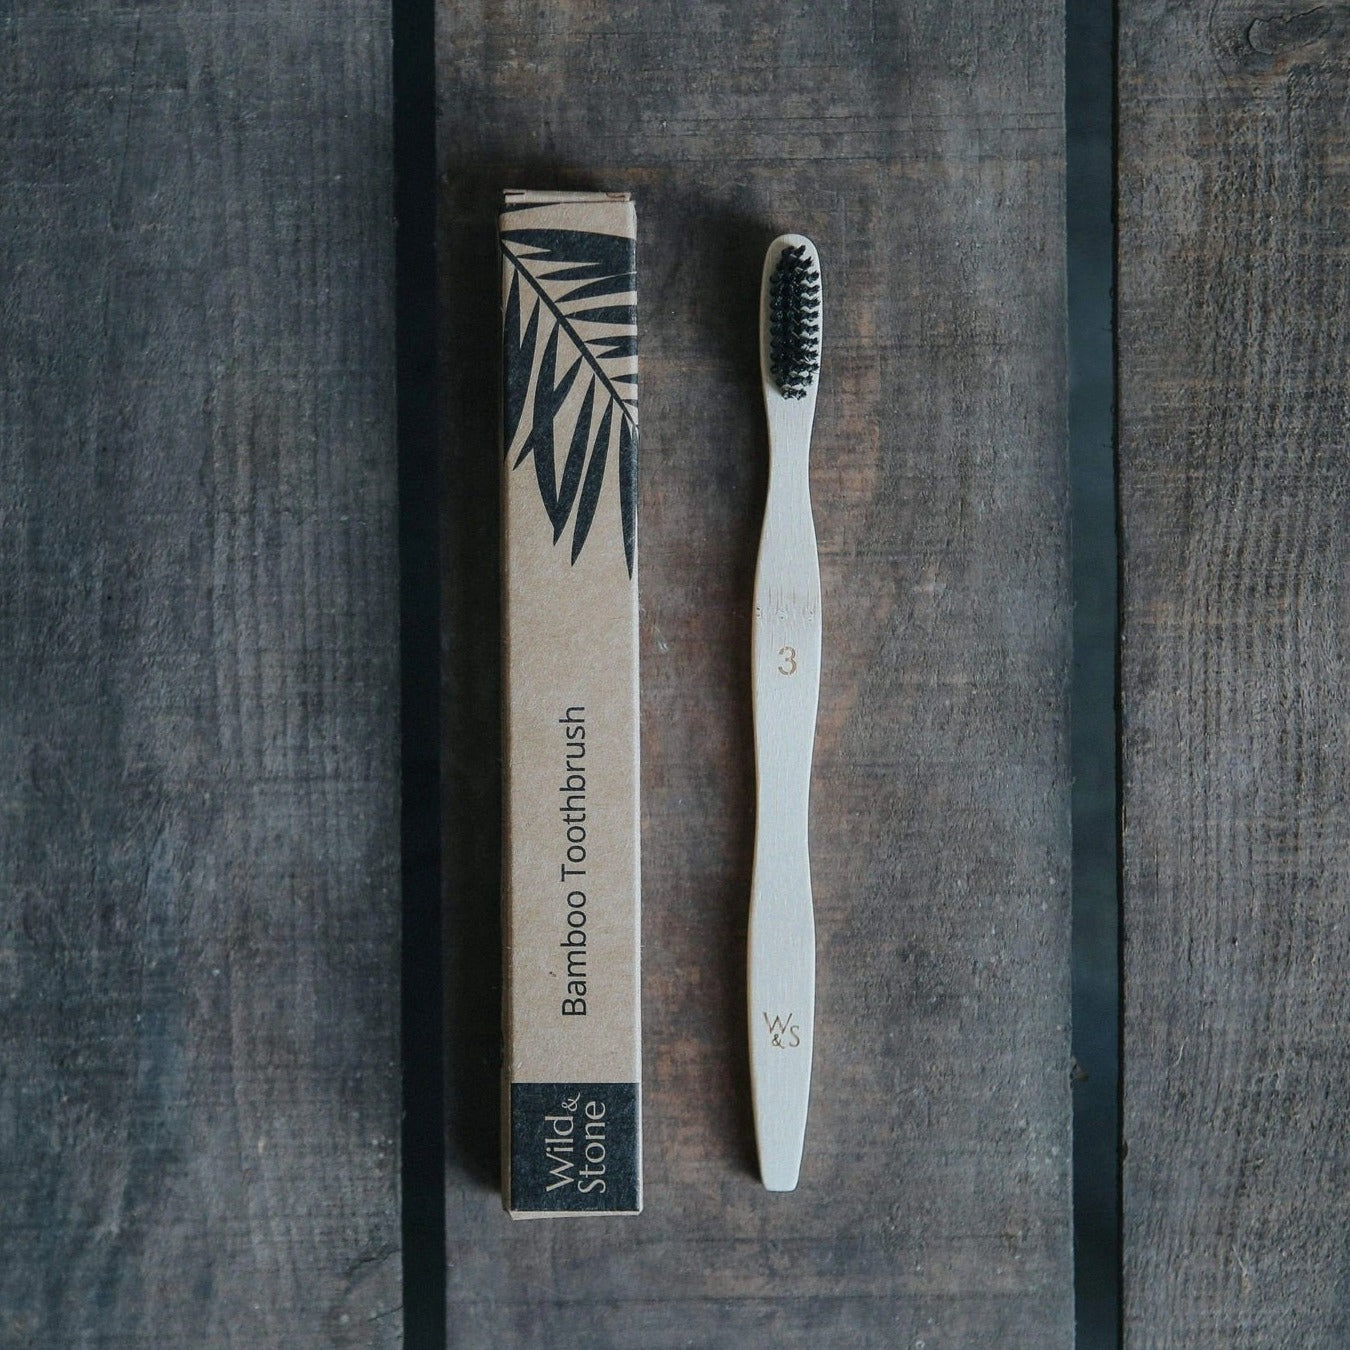 Wild & Stone Adult Bamboo Toothbrush - Medium Bristles - 1 Pack